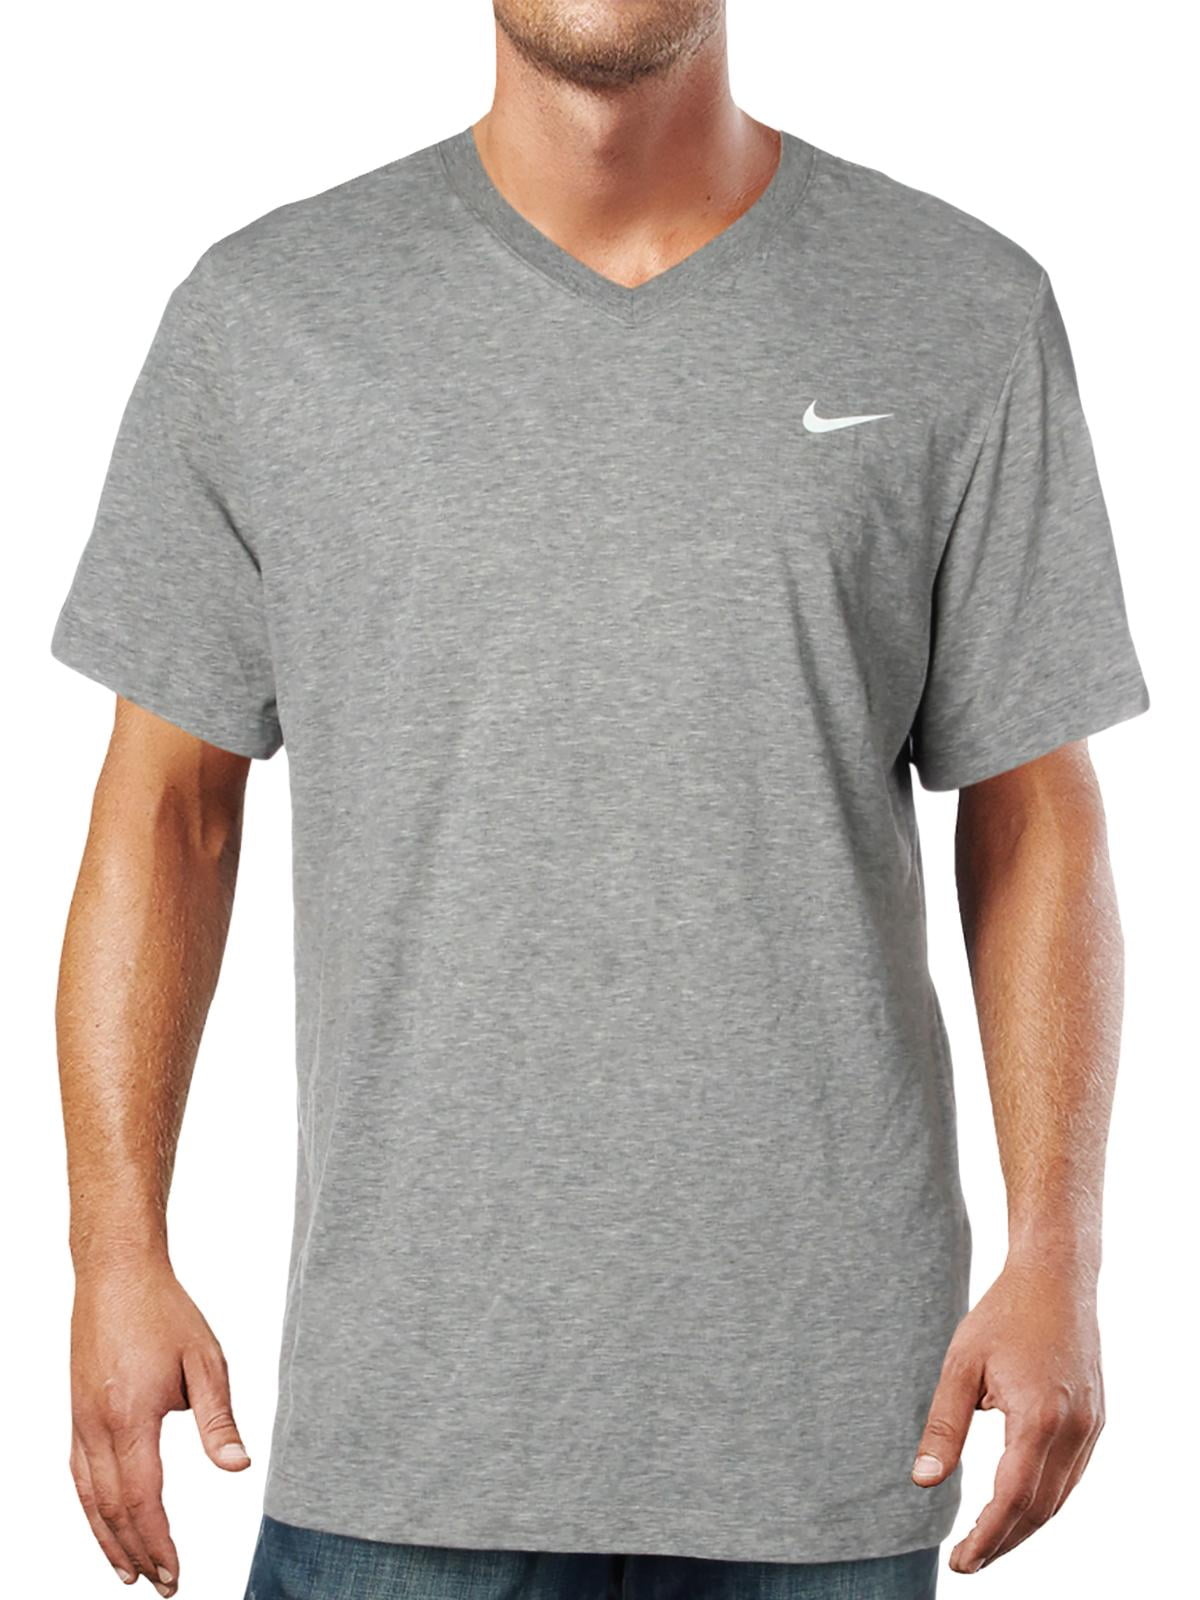 Nike Mens Training Workout T-Shirt - Walmart.com